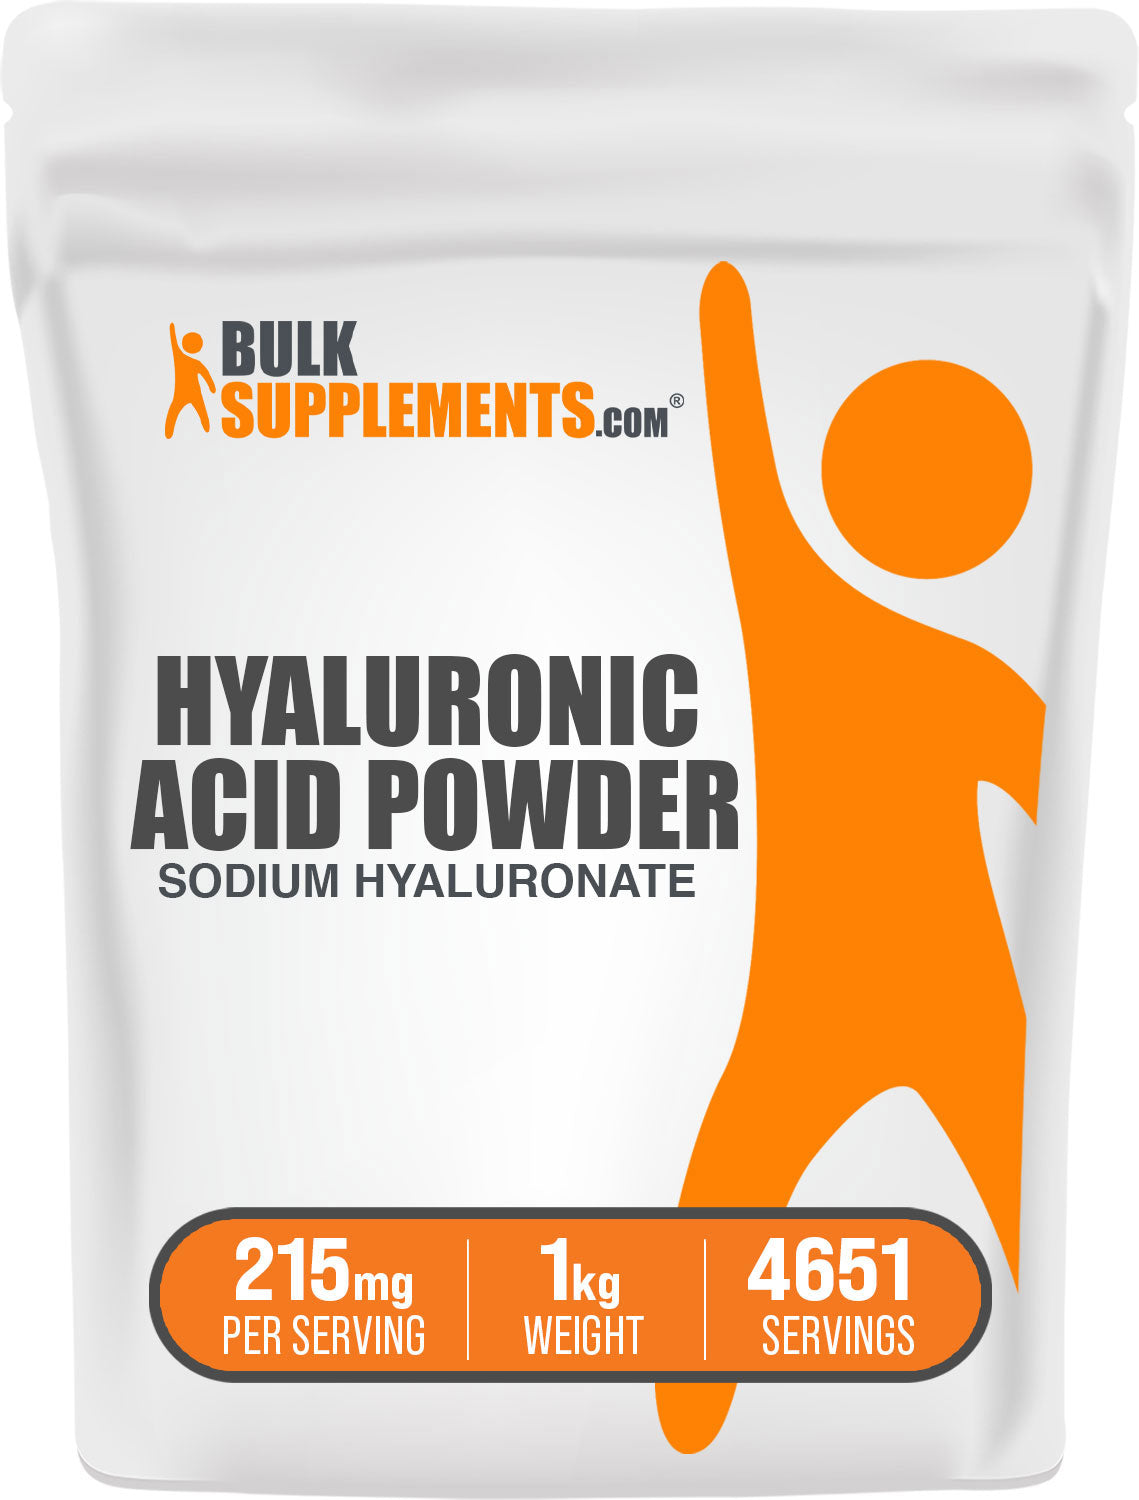 Hyaluronic Acid Powder 1kg